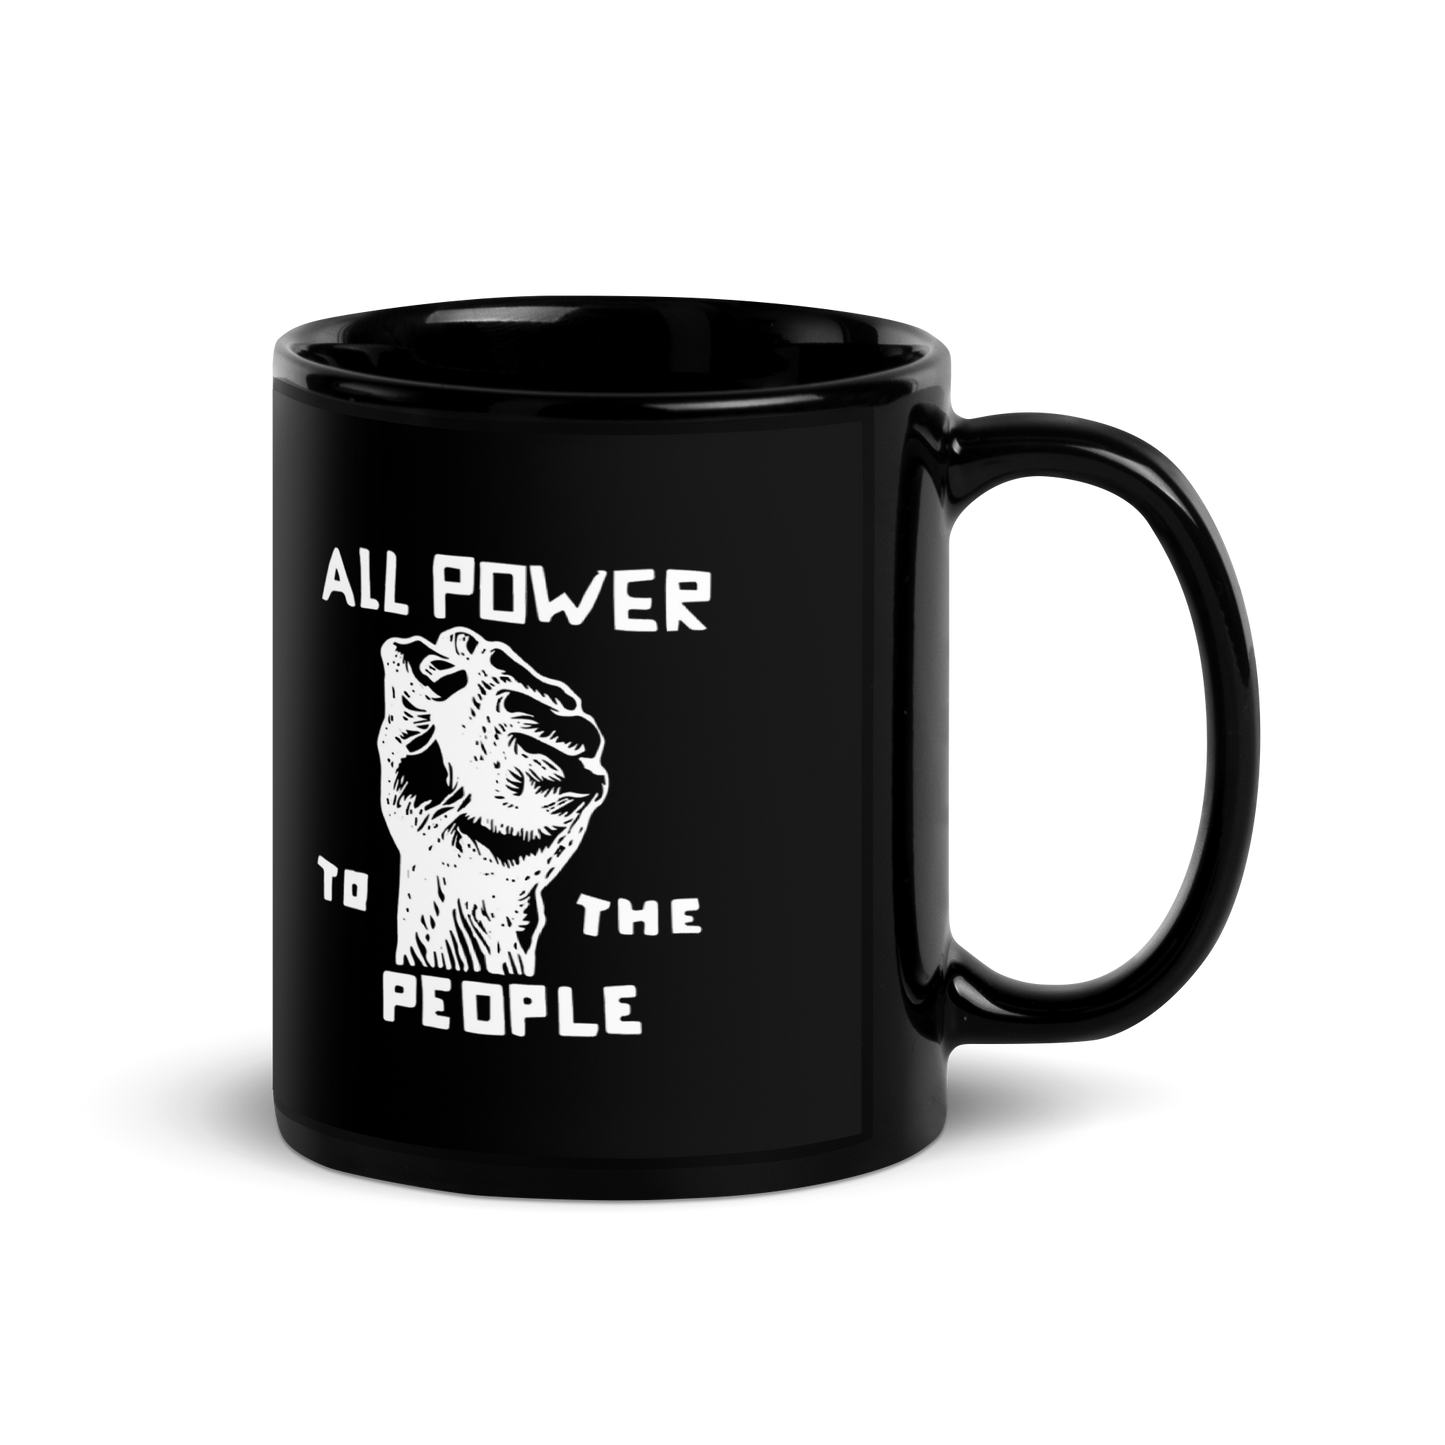 All Power to the People Mug